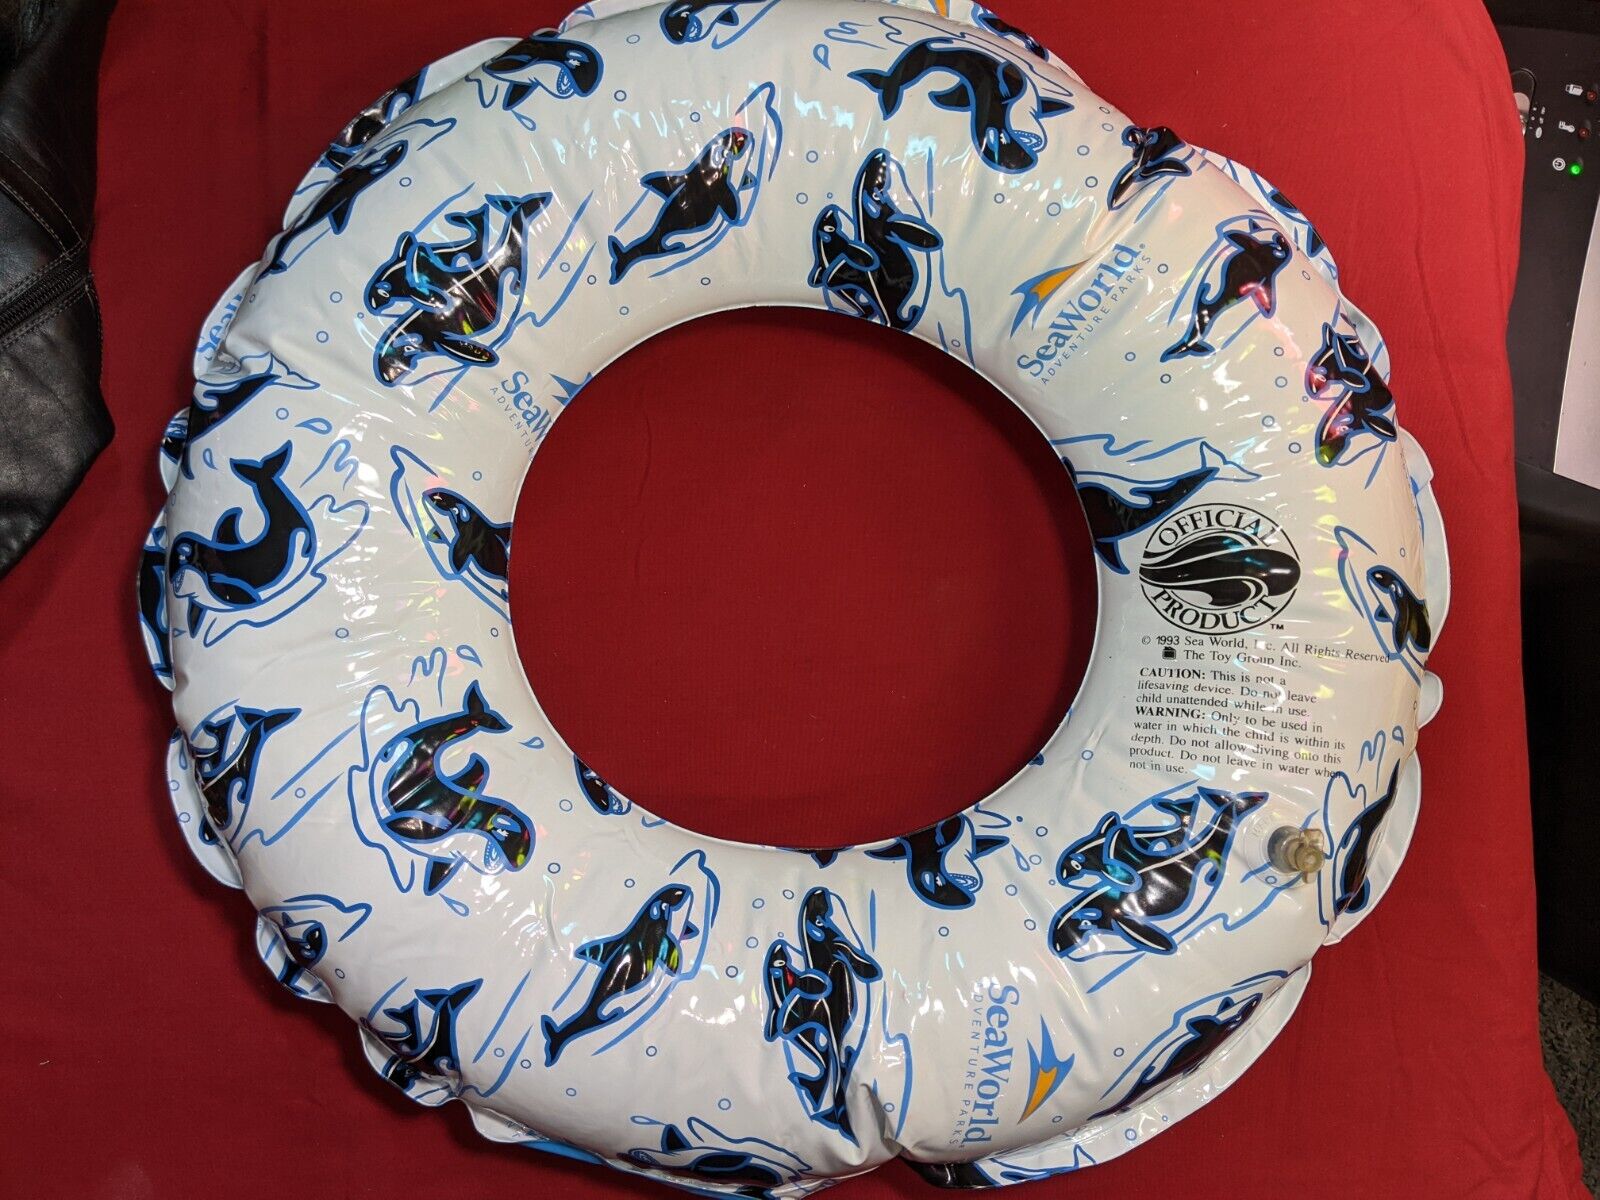 Vintage Original Sea World Shamu Killer Whale water Inflatable ring float 1993